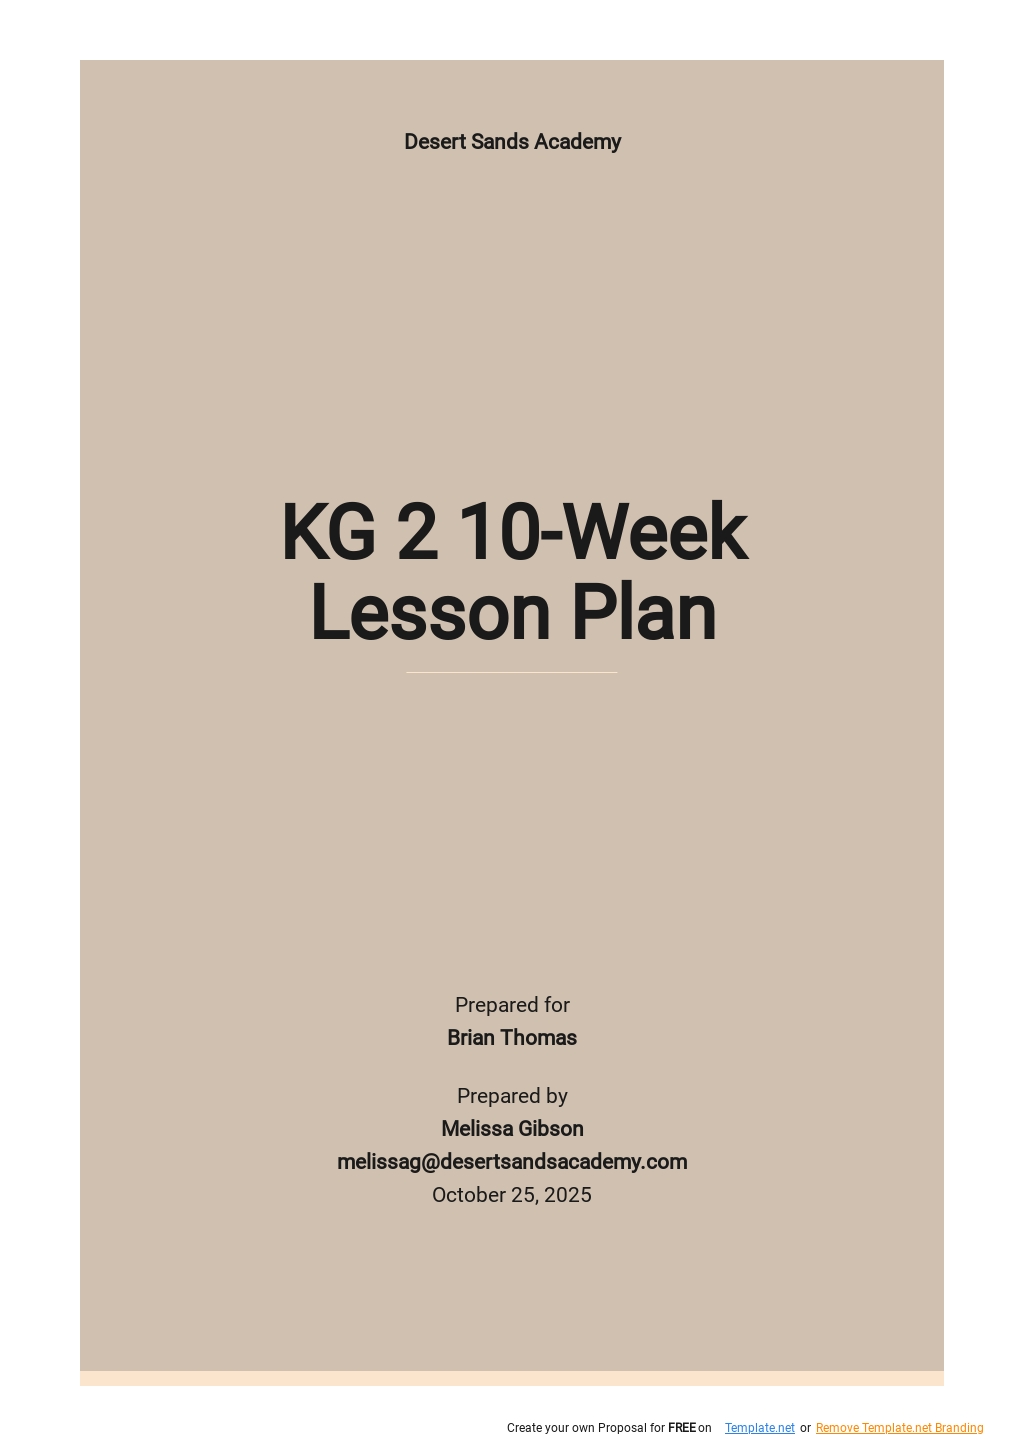 KG 2 Week 10 Lesson Plan Template.jpe